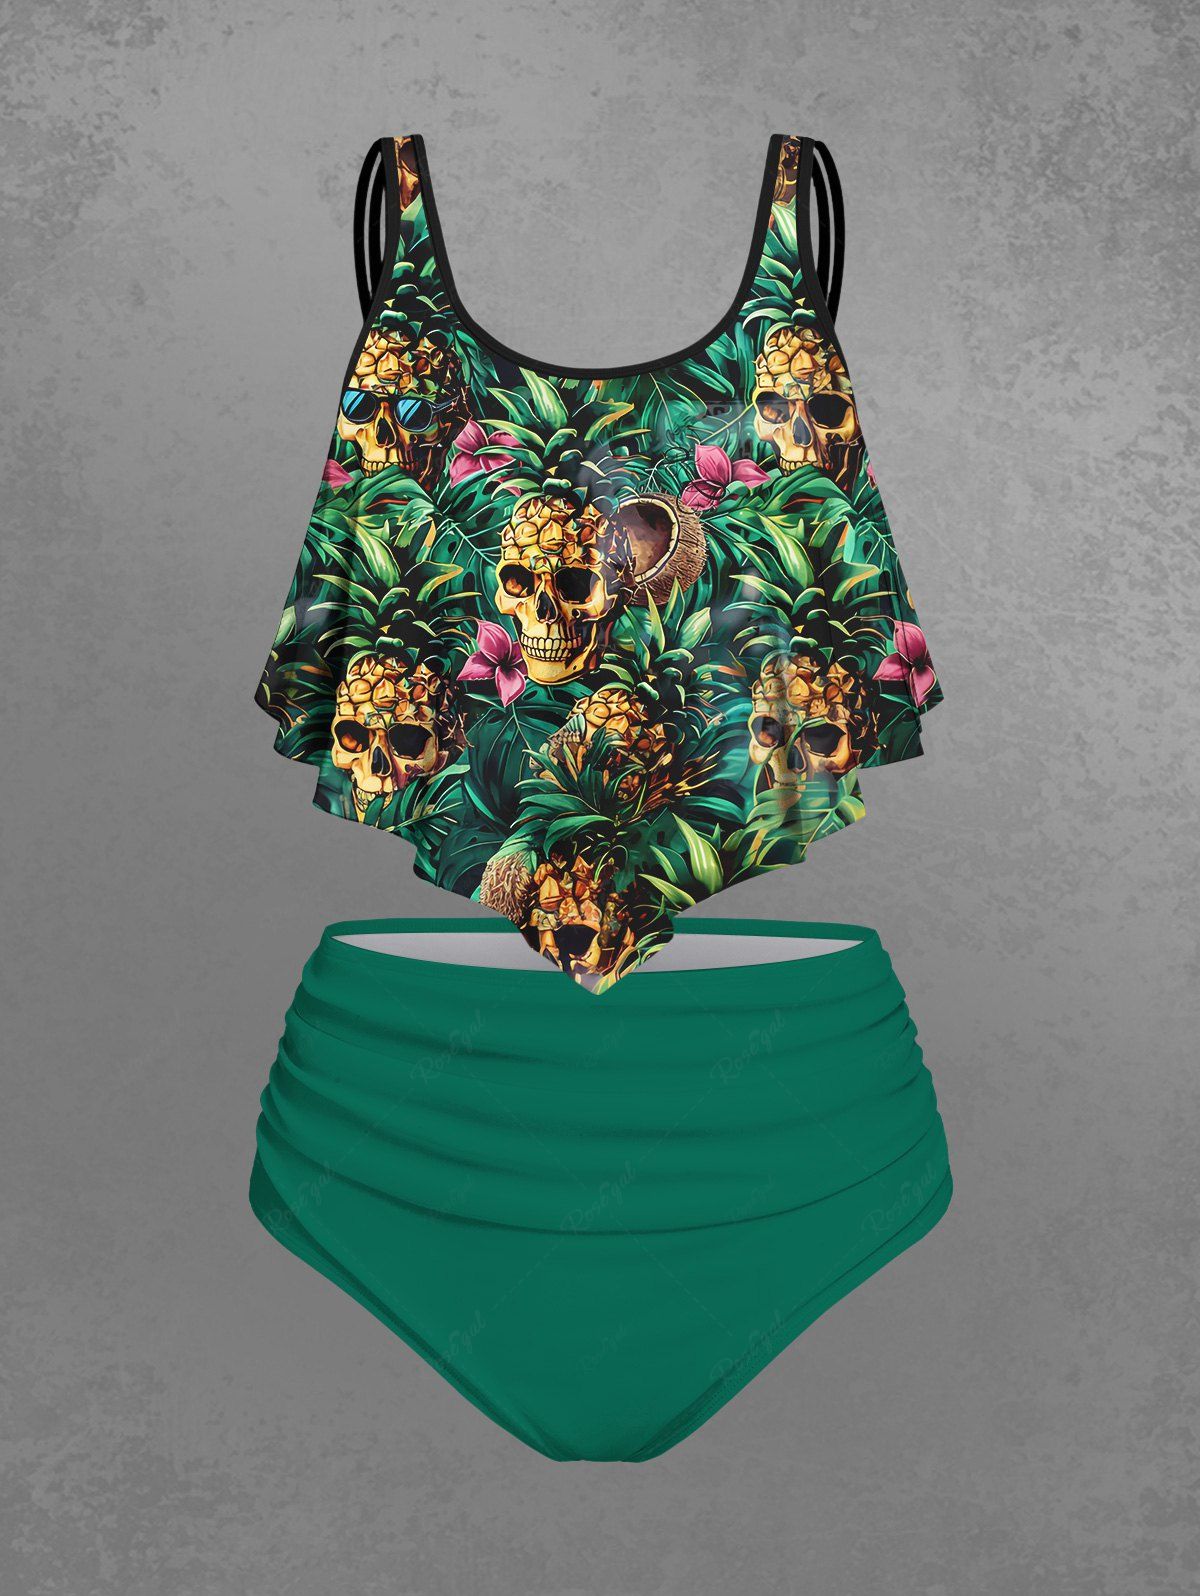 Gothic Skulls Pineapple Flowers Print Hawaii Tankini Swimsuit(Adjustable Shoulder Strap)